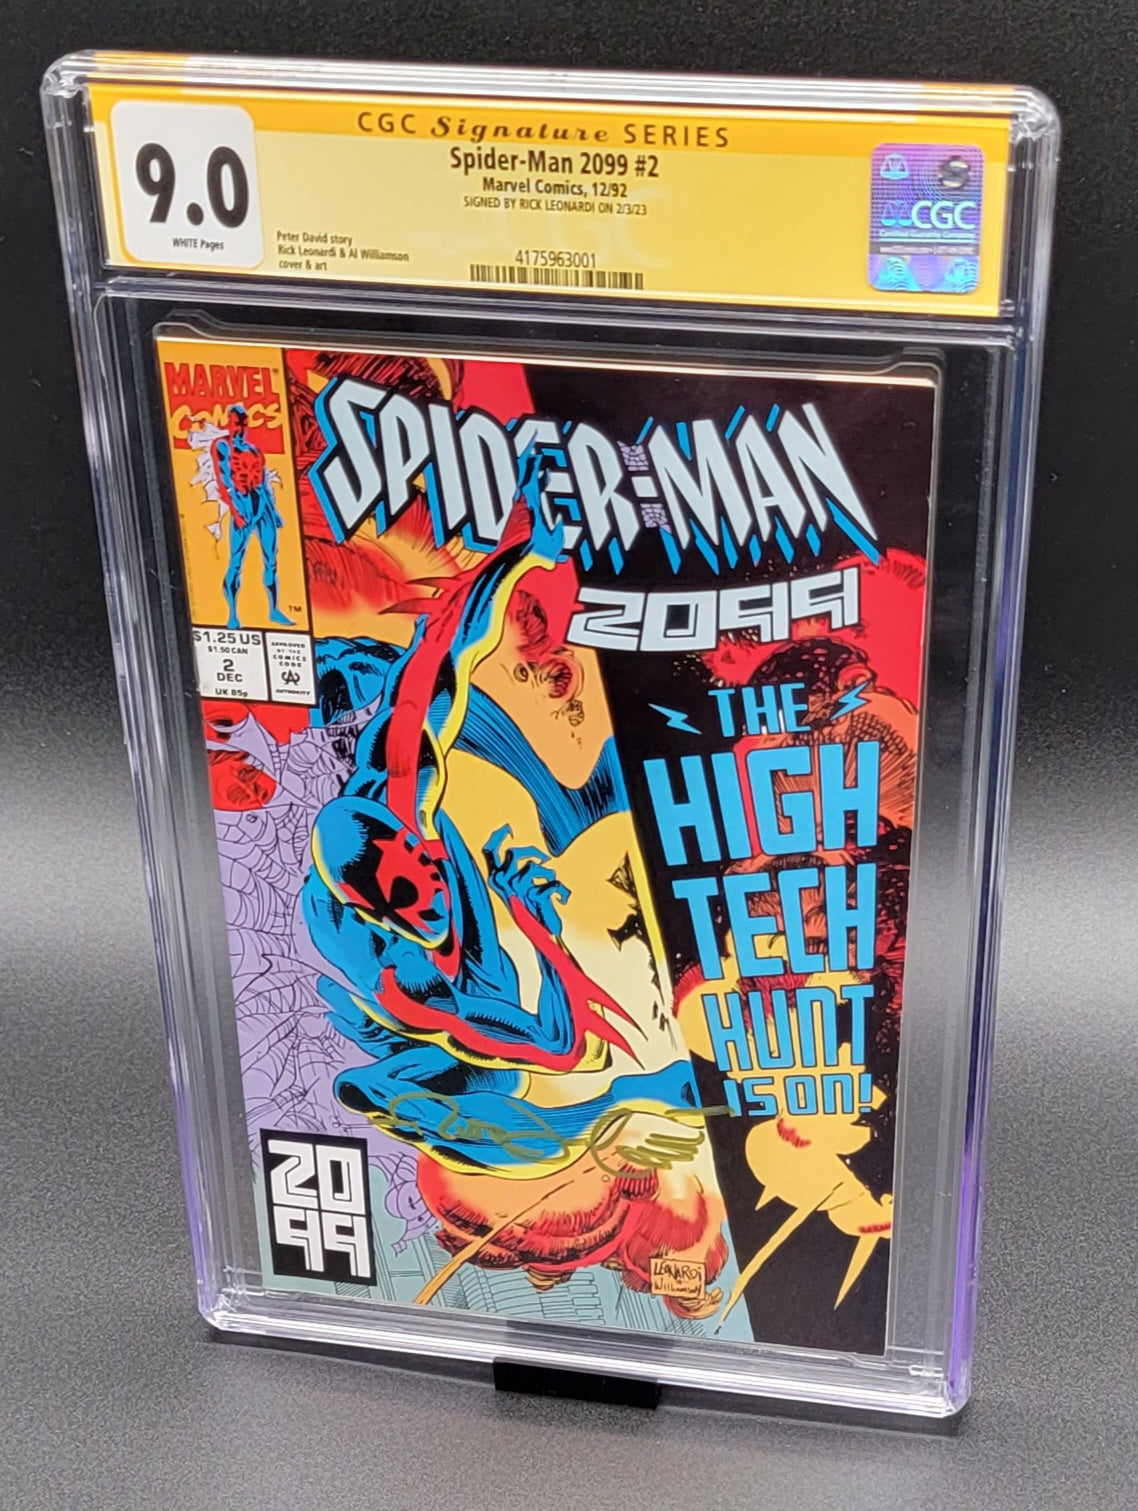 Spider-Man 2099 #2 CGC SS 9.0 Rick Leonardi